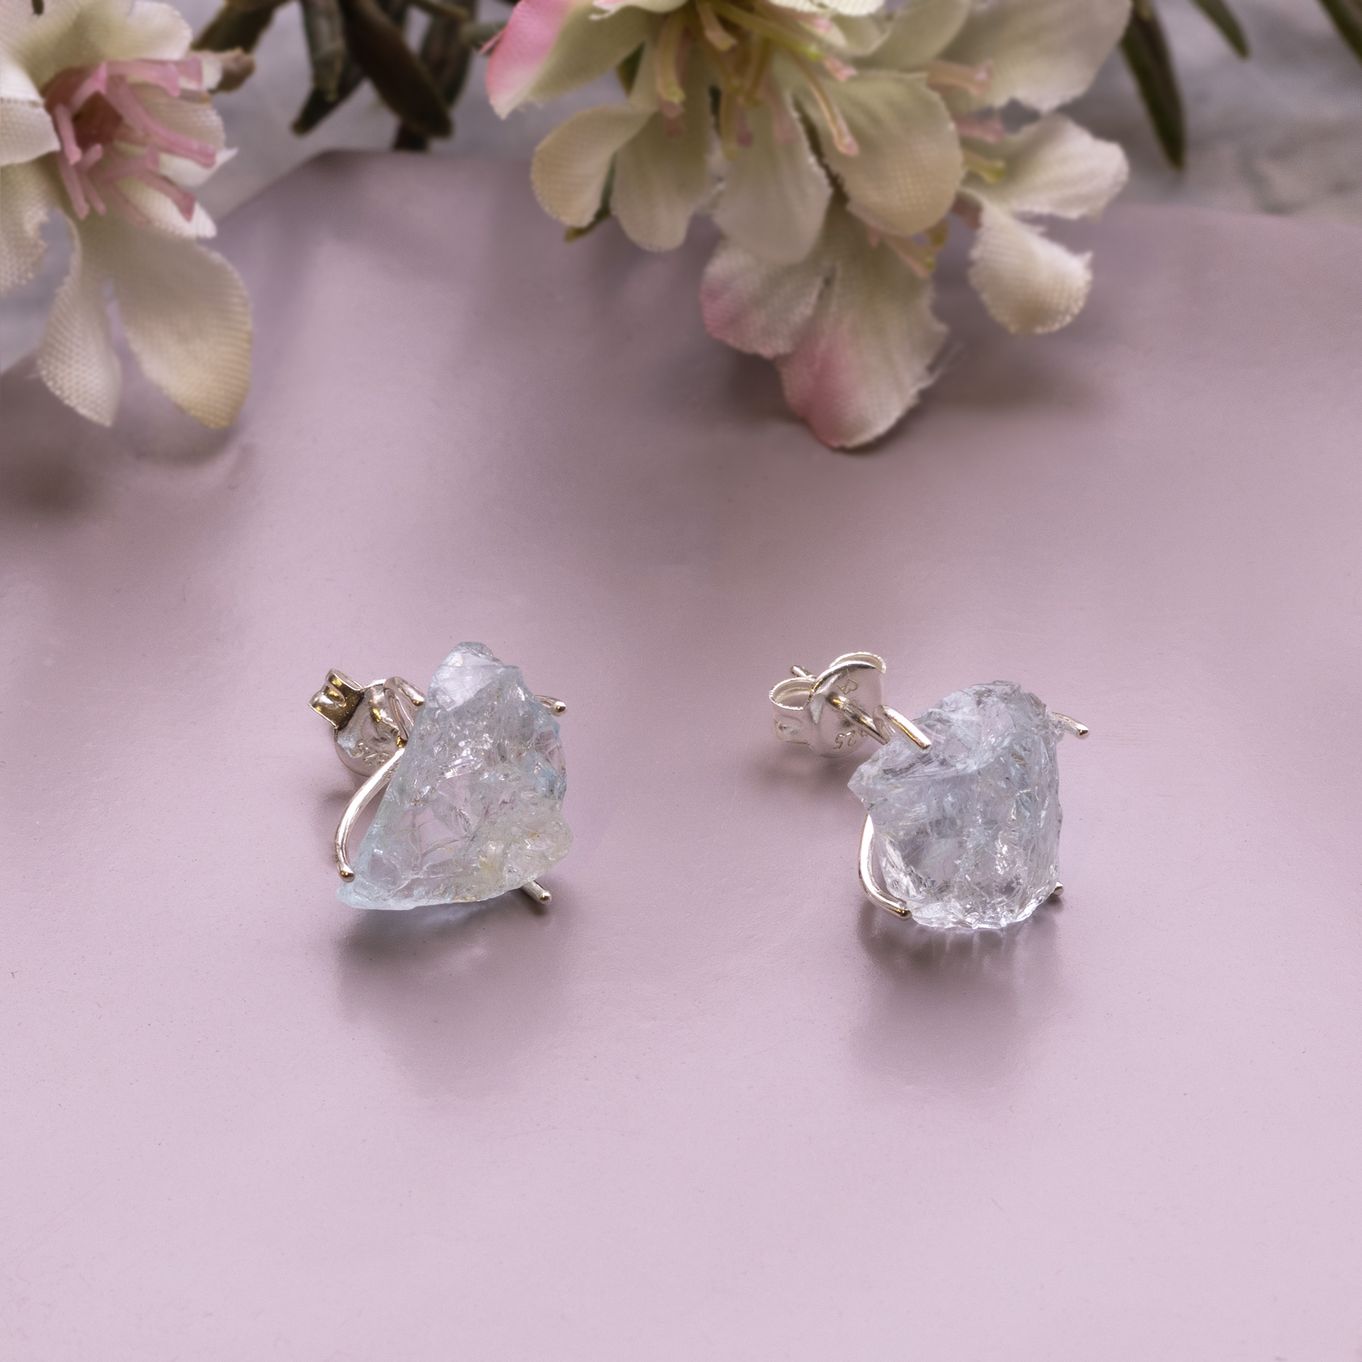 Aquamarine Crystal Earstud Earrings